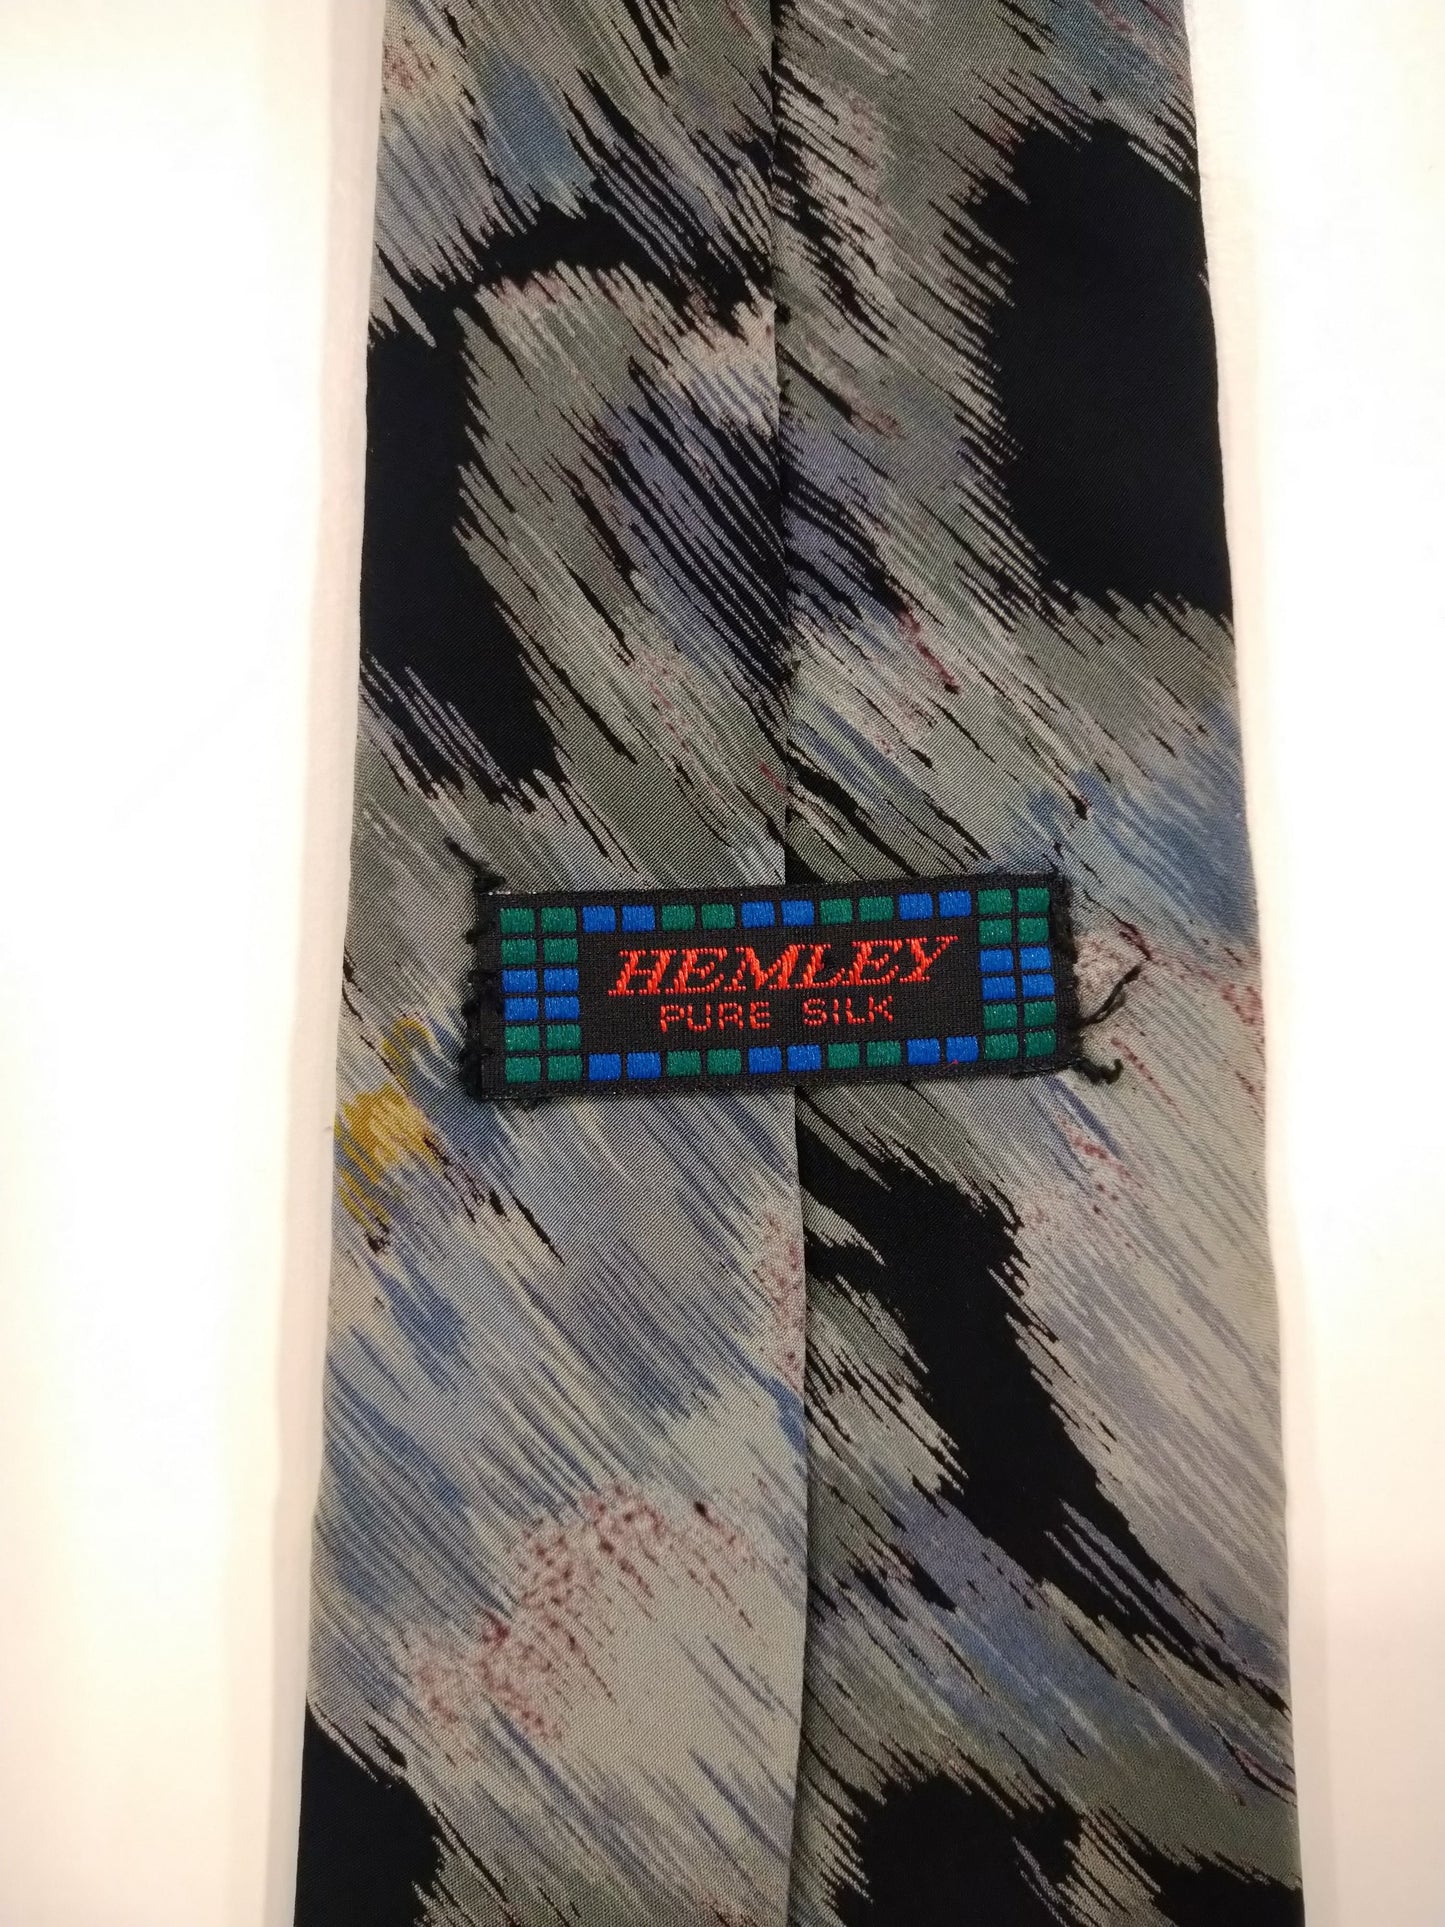 Cravatta laterale di Hemley. Bel motivo.